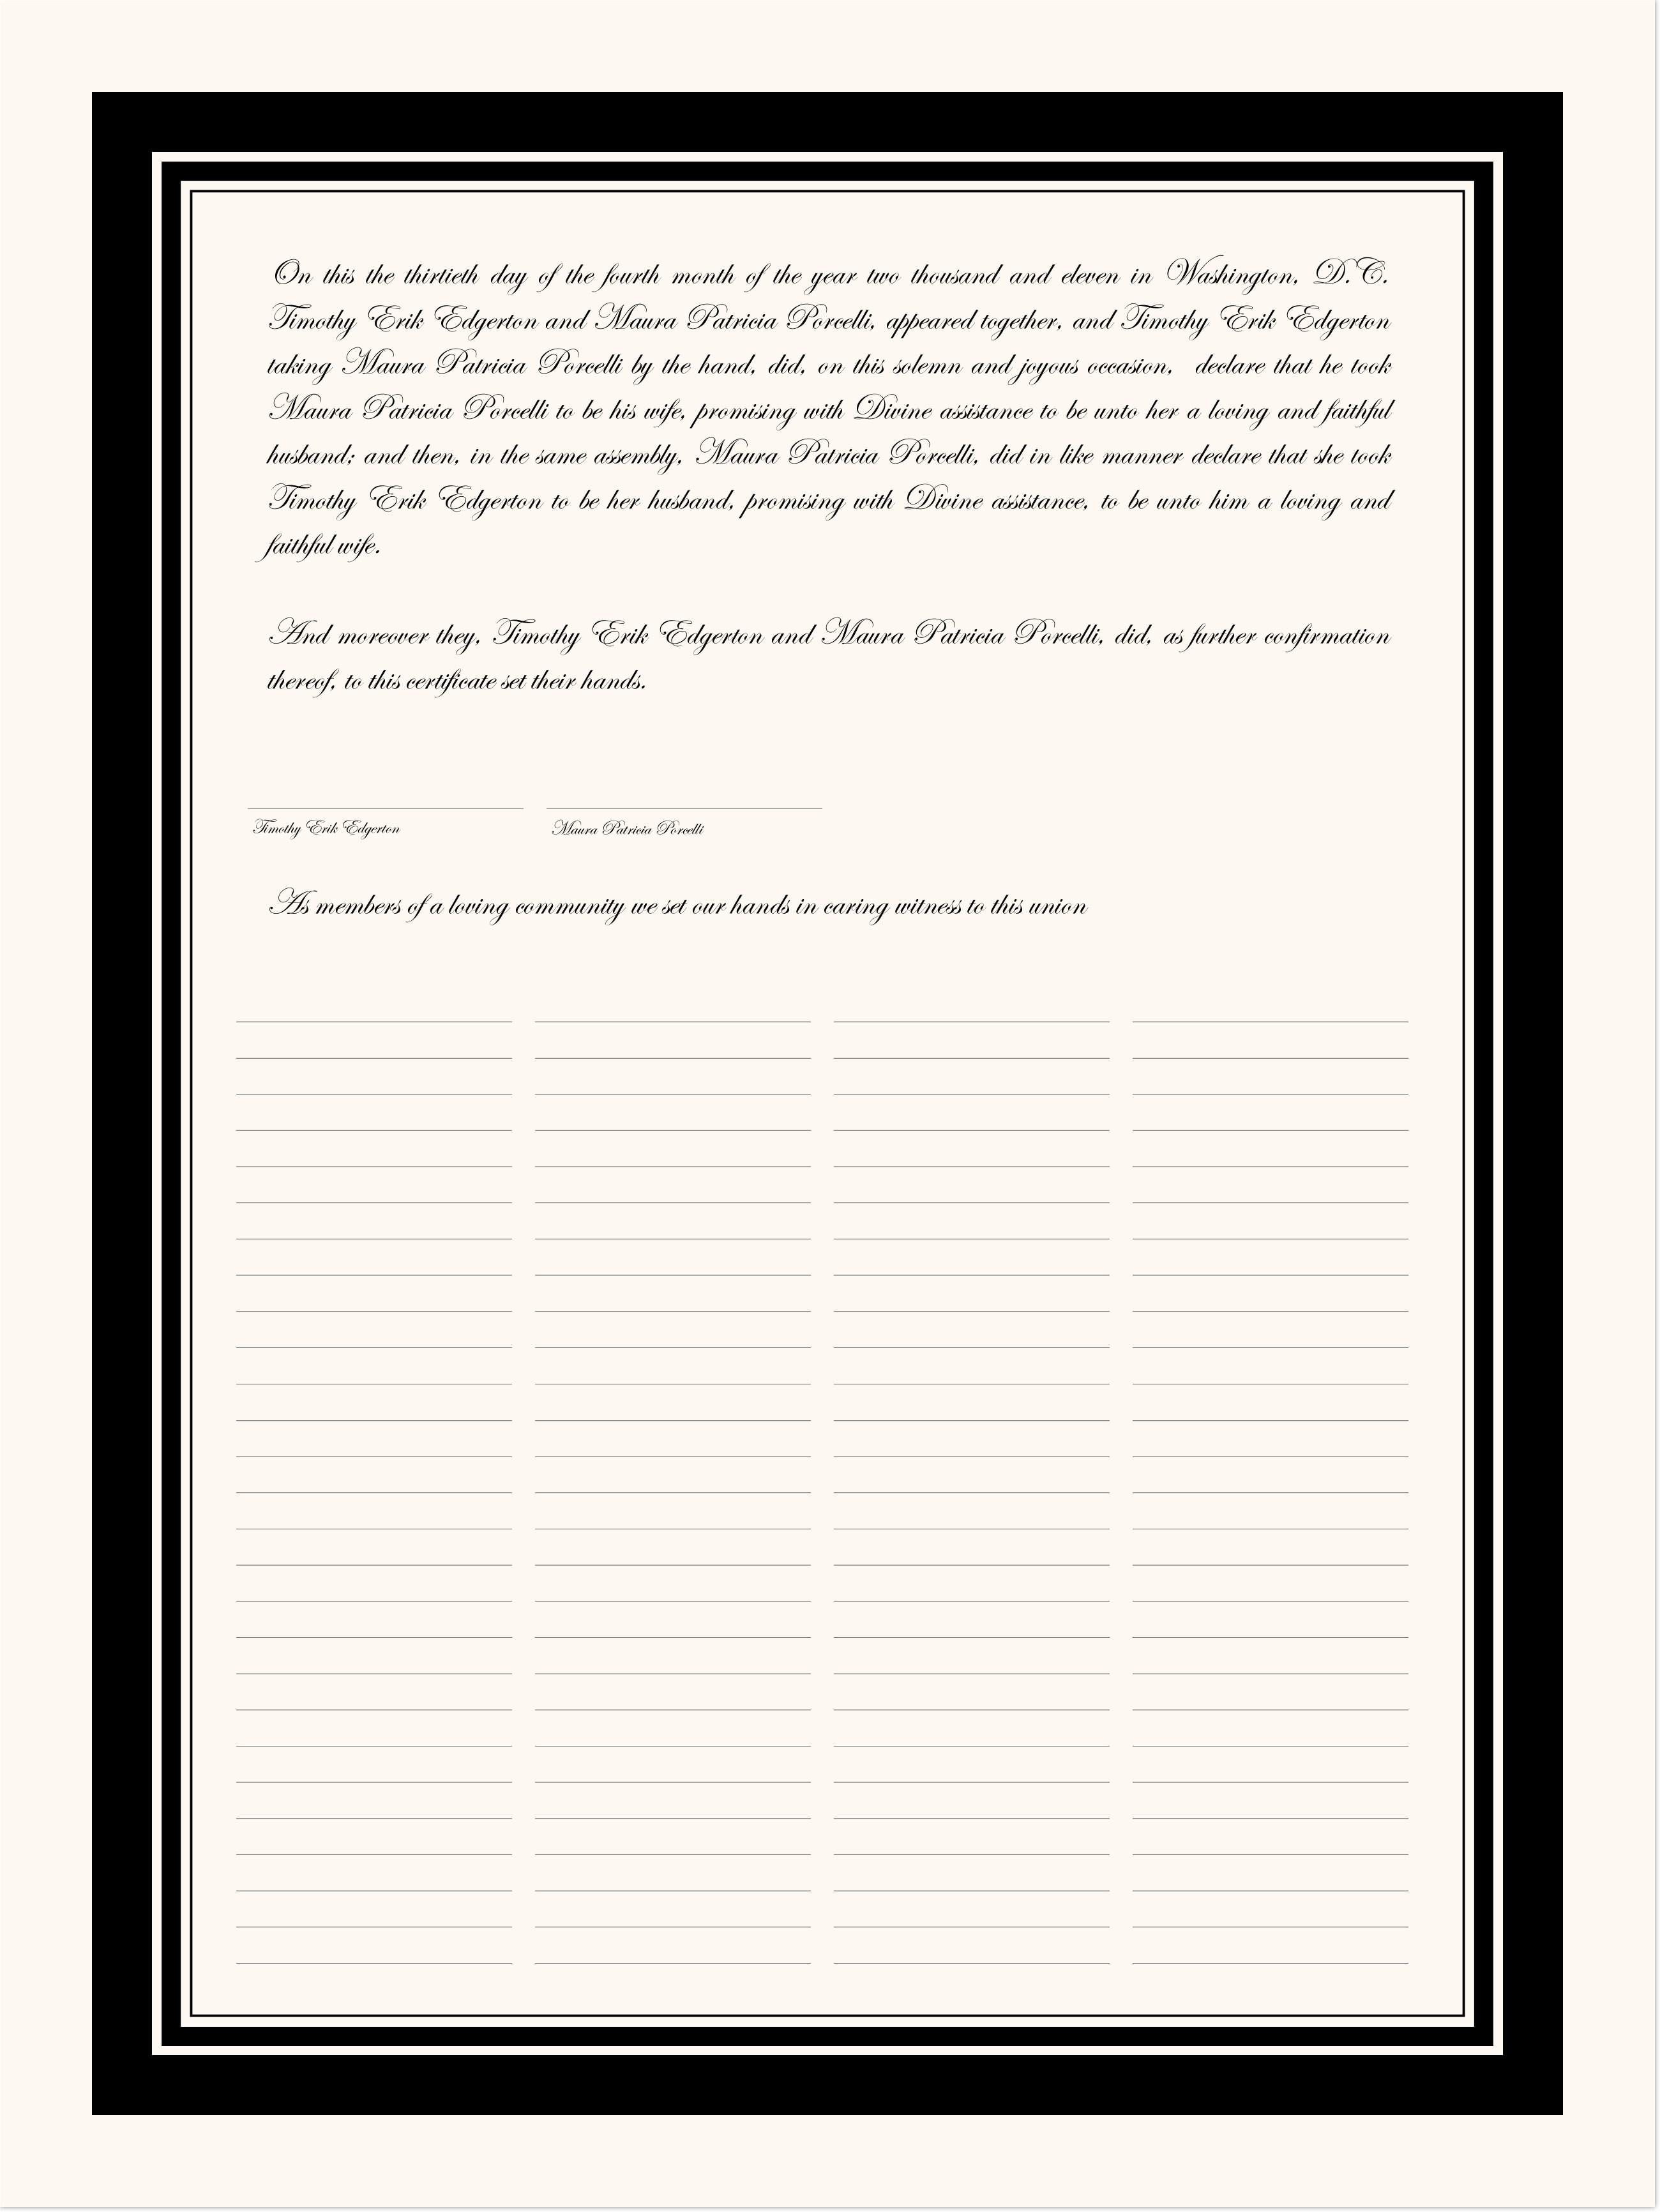 Quaker Wedding Certificate Archival Acid Free Confirmation